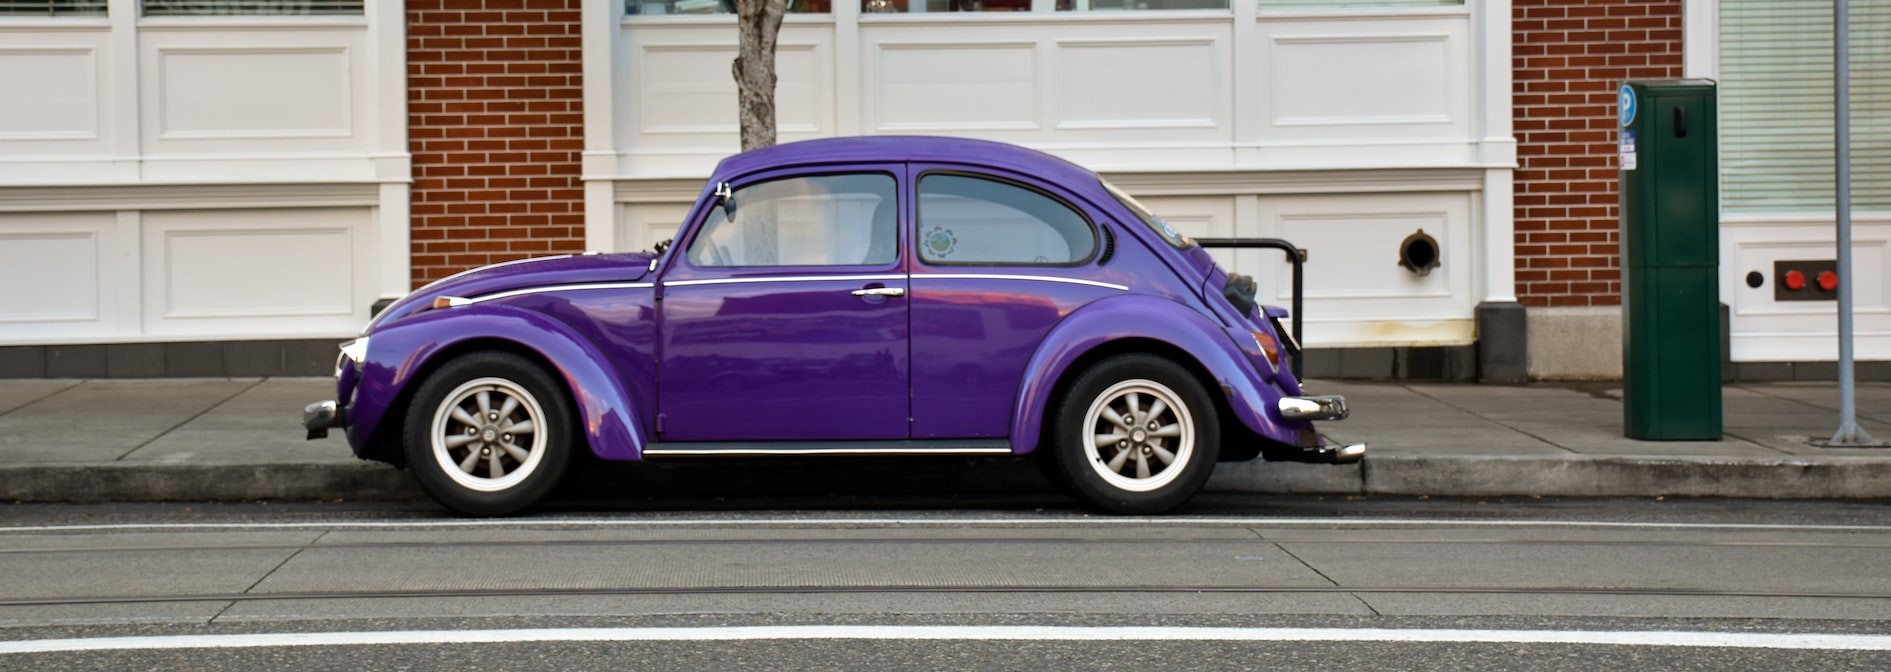 Purple Beetle Car | Kids Car Donations